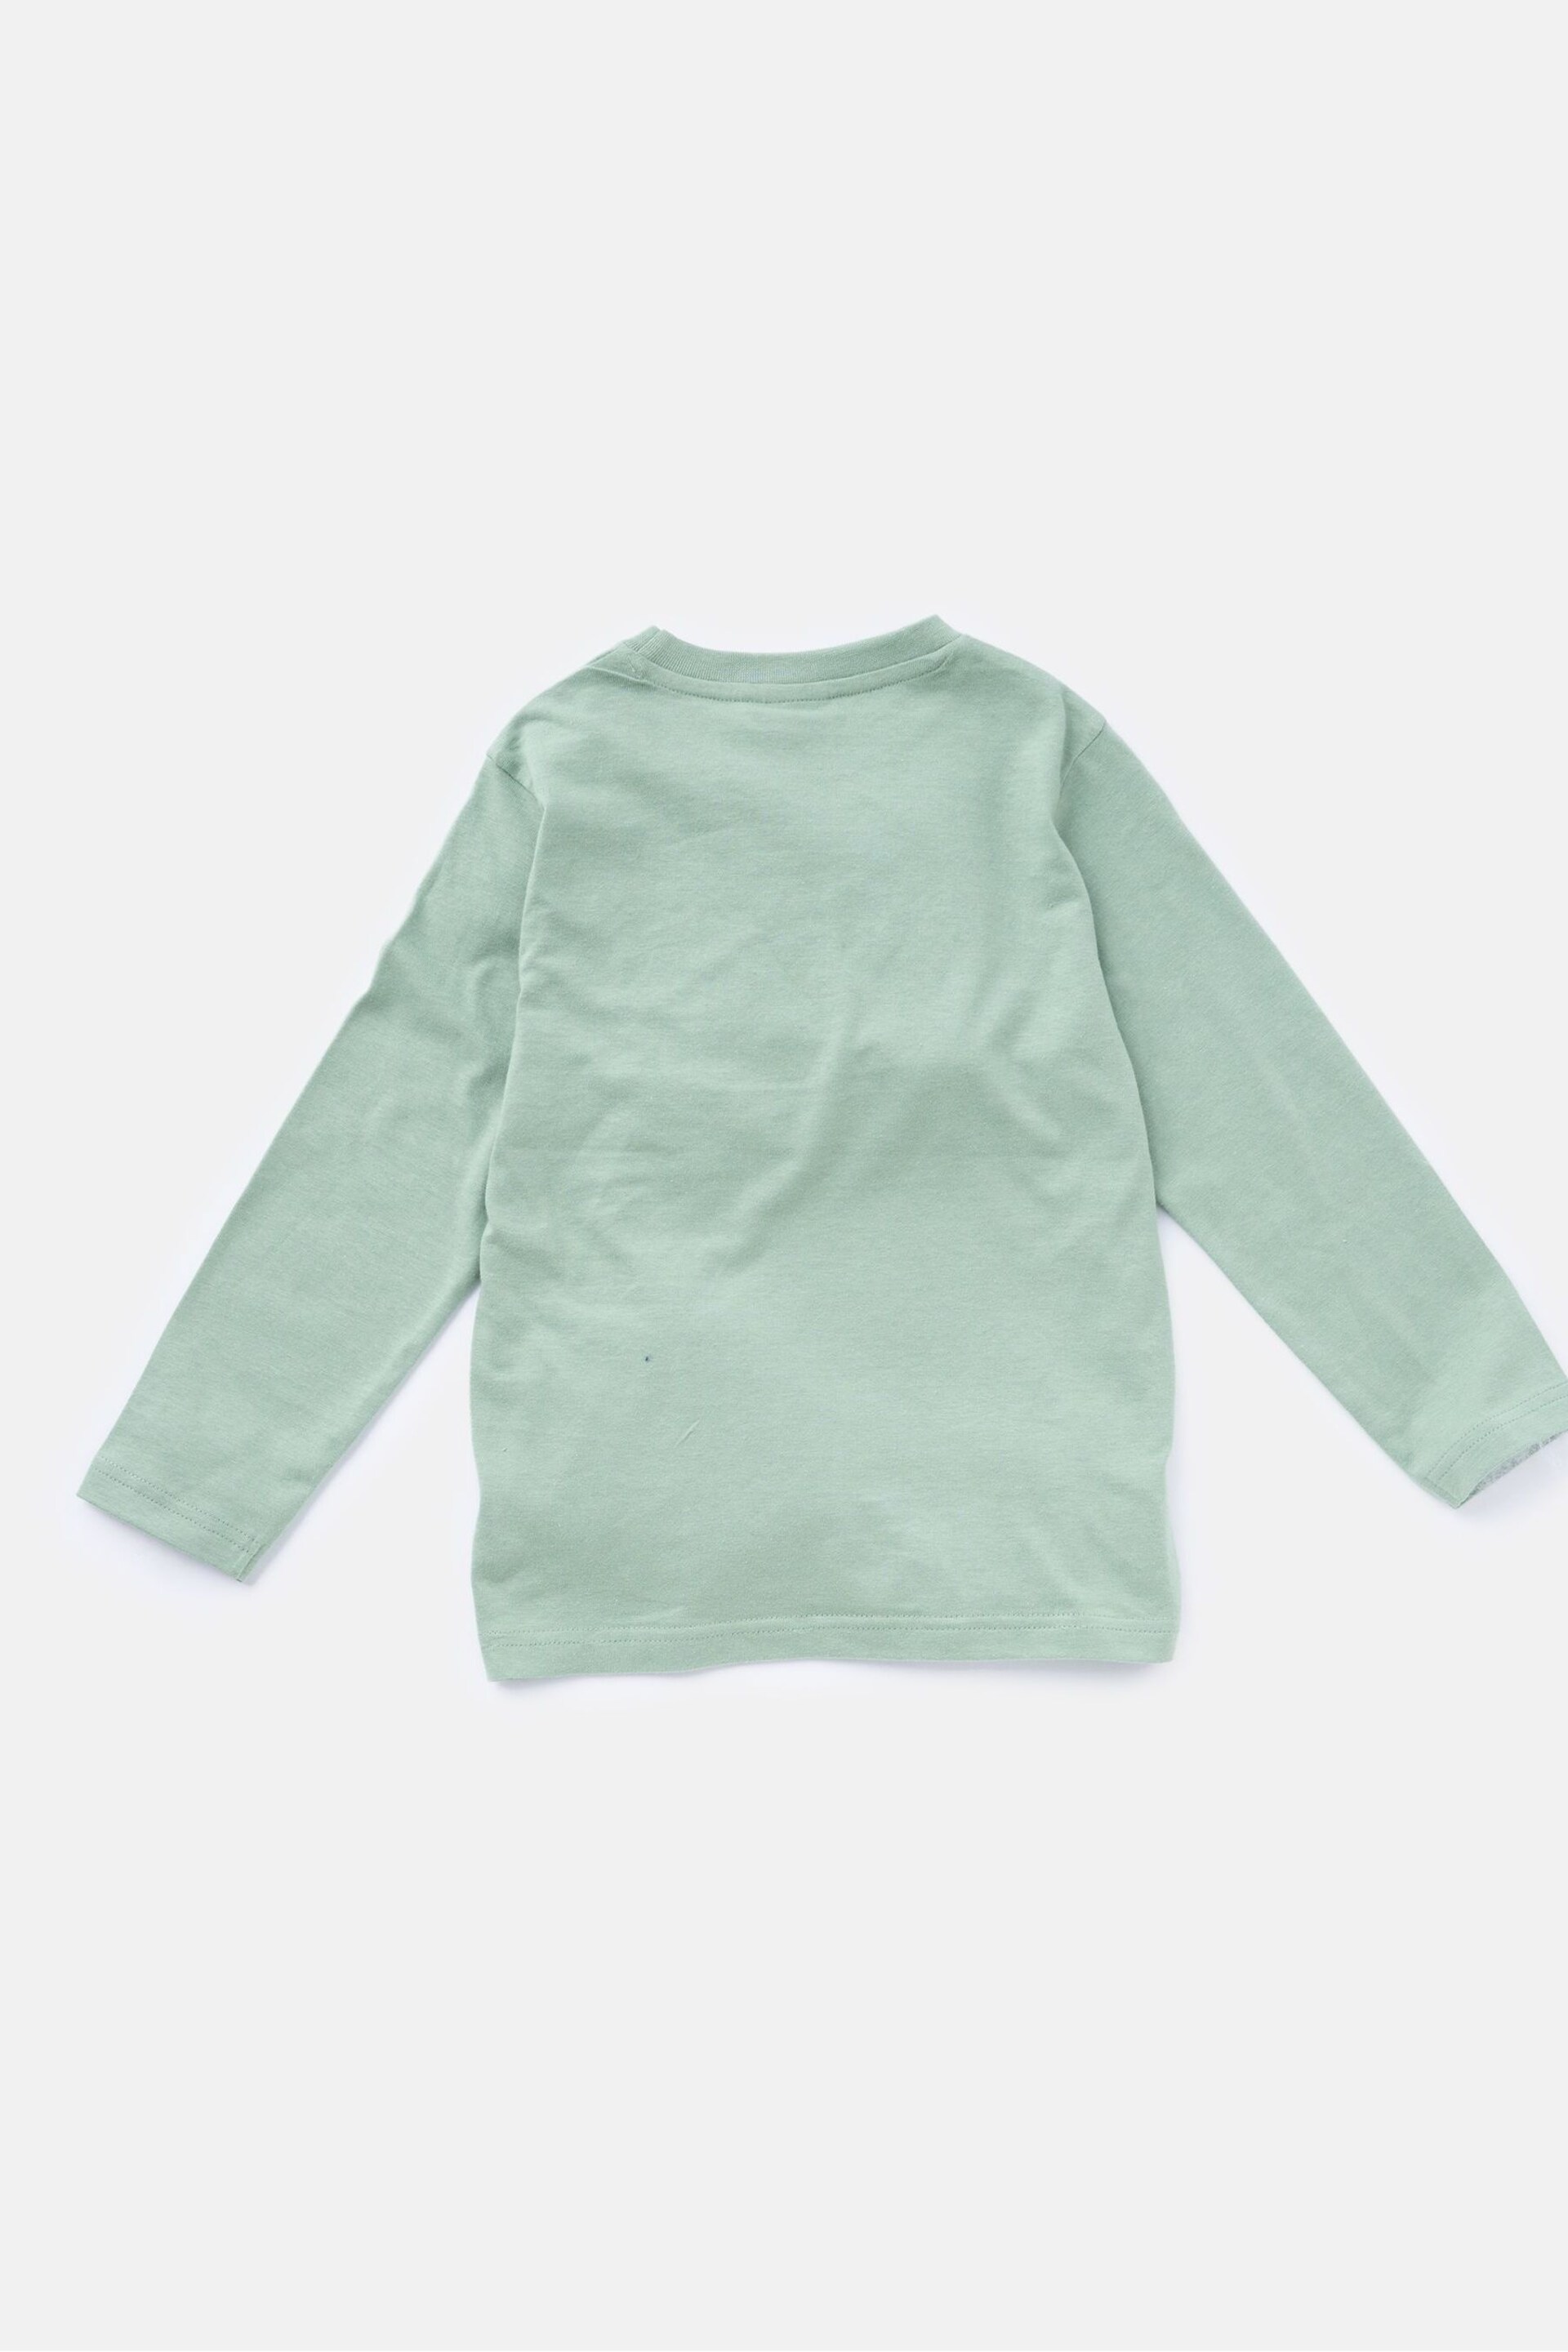 Angel & Rocket Green Long Sleeve T-Shirt - Image 4 of 5